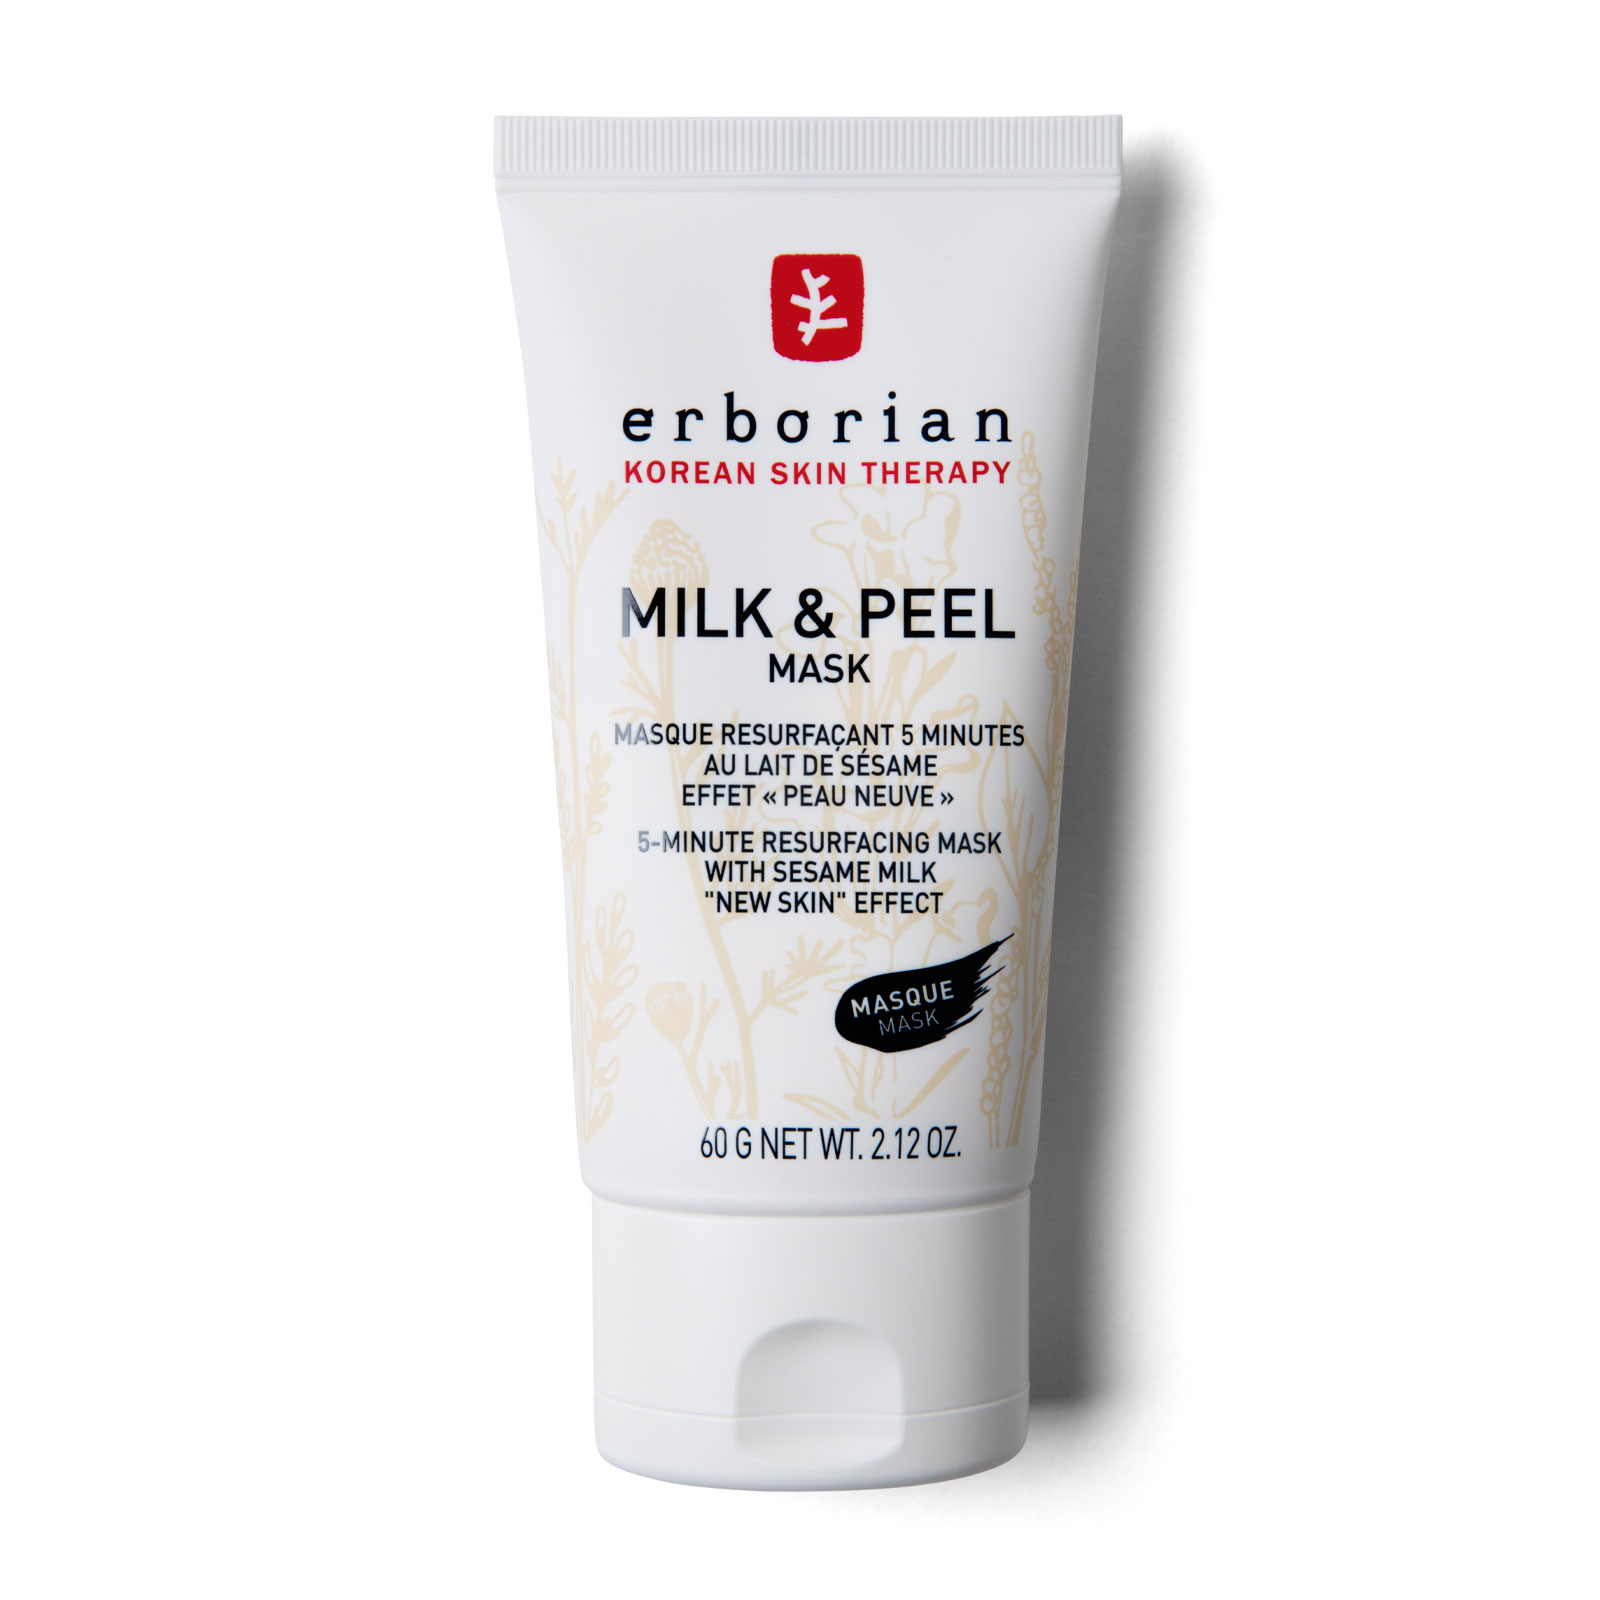 Erborian Milk & Peel Mask - 5 Minutes Resurfacing Mask 60 G